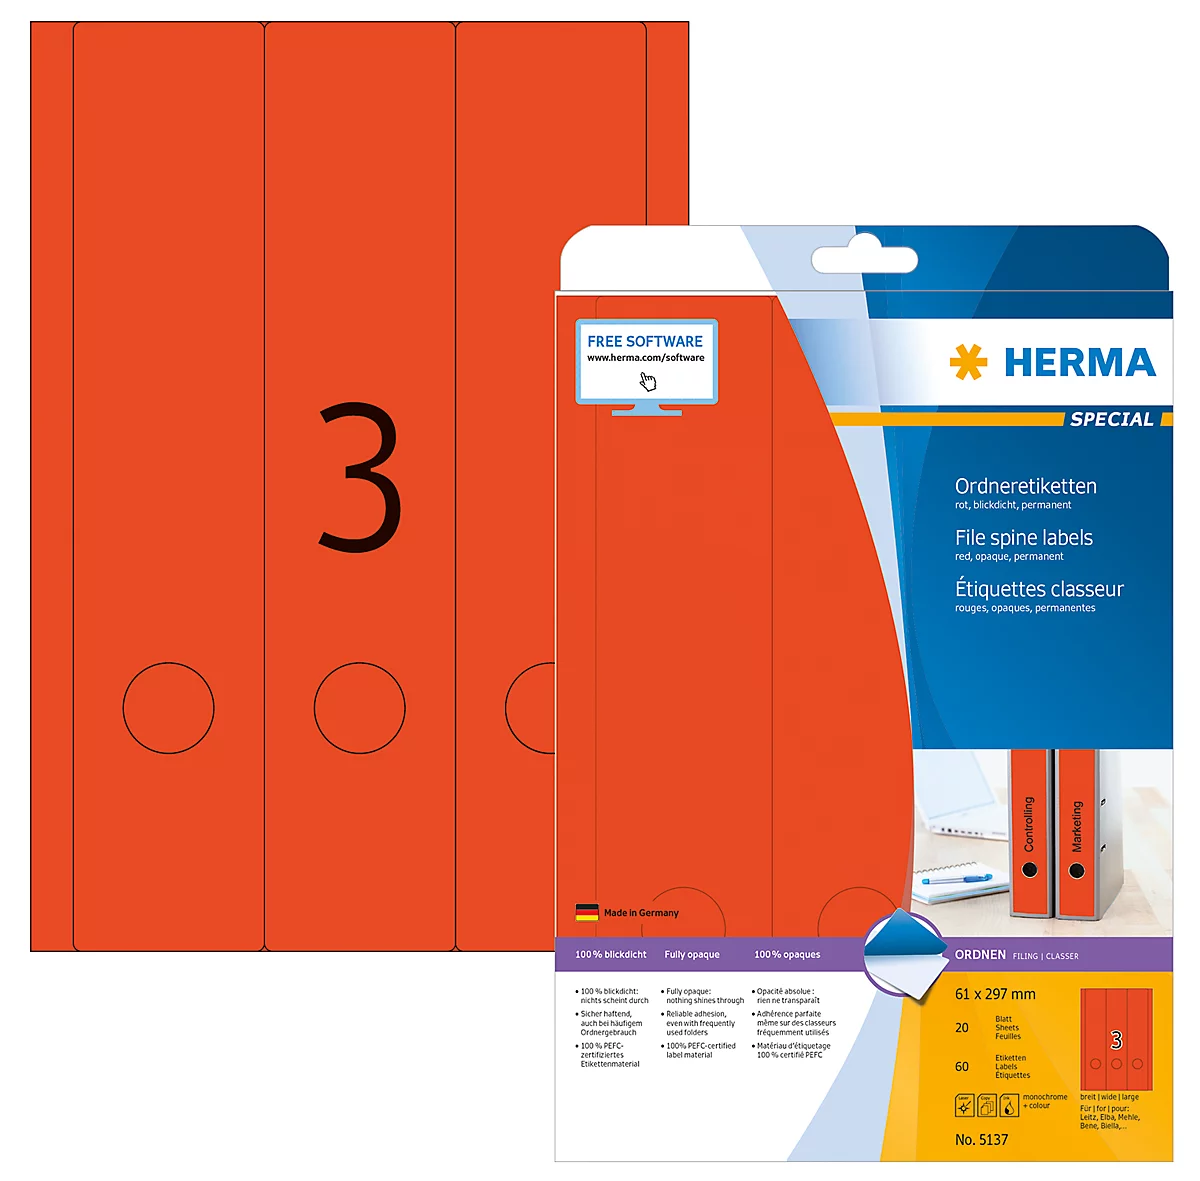 Herma Ordneretiketten A4, 297 x 61 mm, permanent haftend/bedruckbar, 60 Stück, rot